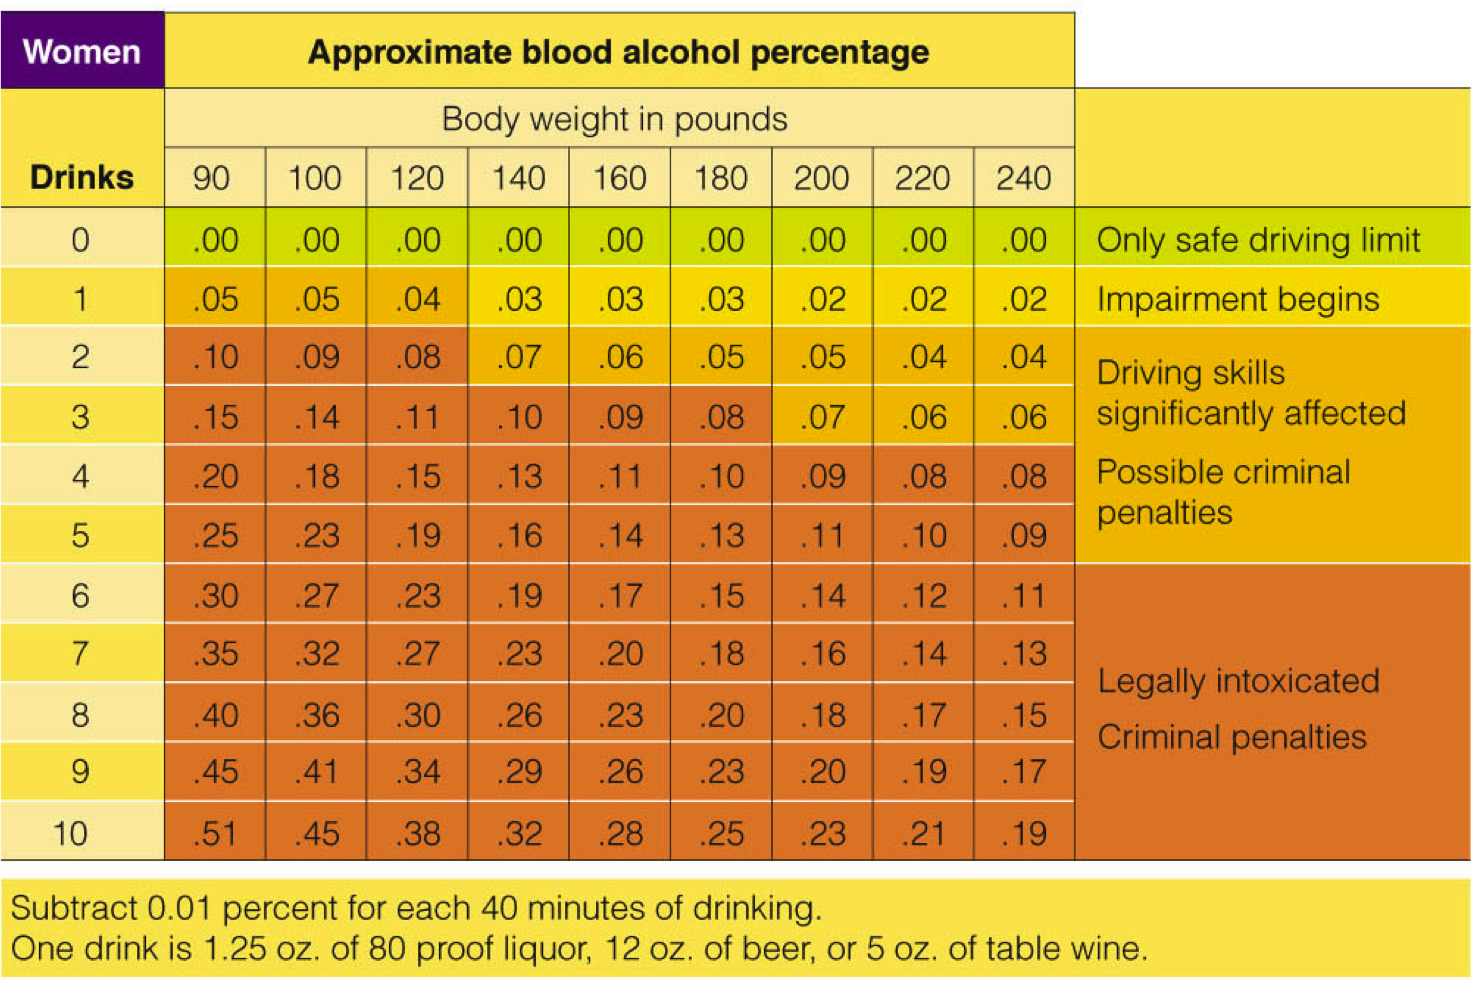 Blood Alcohol Chart Symptoms